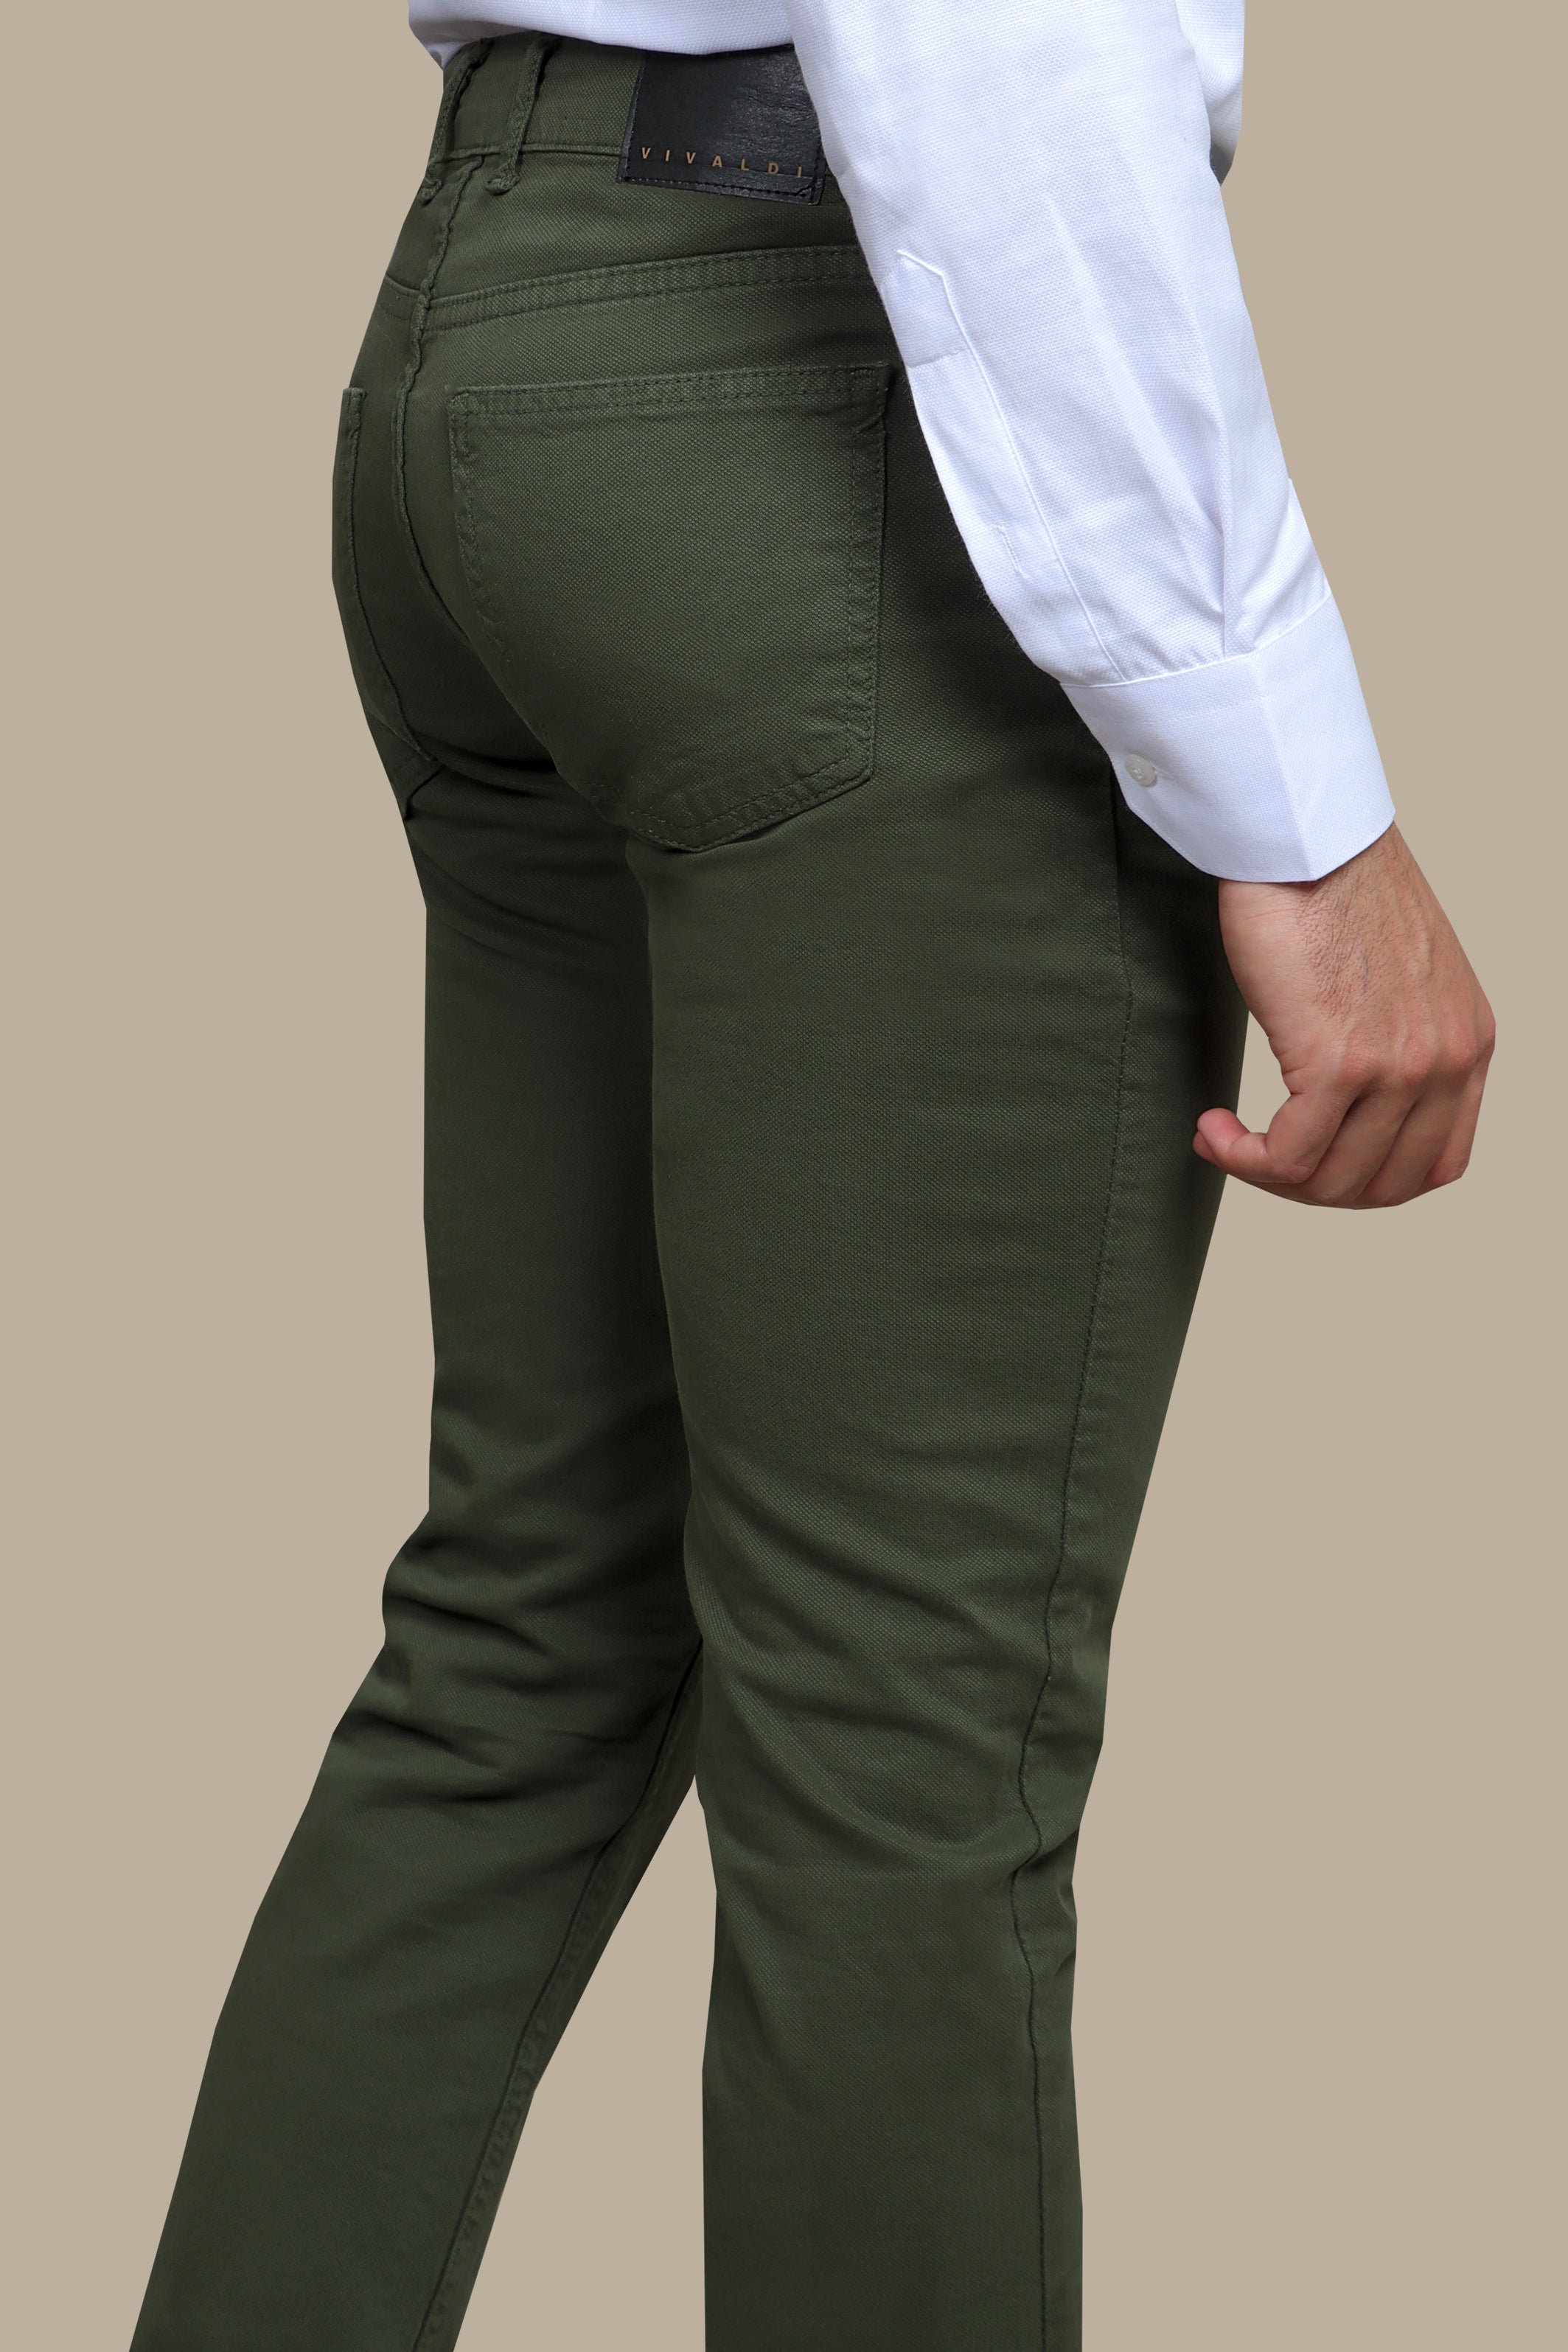 Emerald Elegance: 5-Pocket Oxford Pants in Rich Green Hues